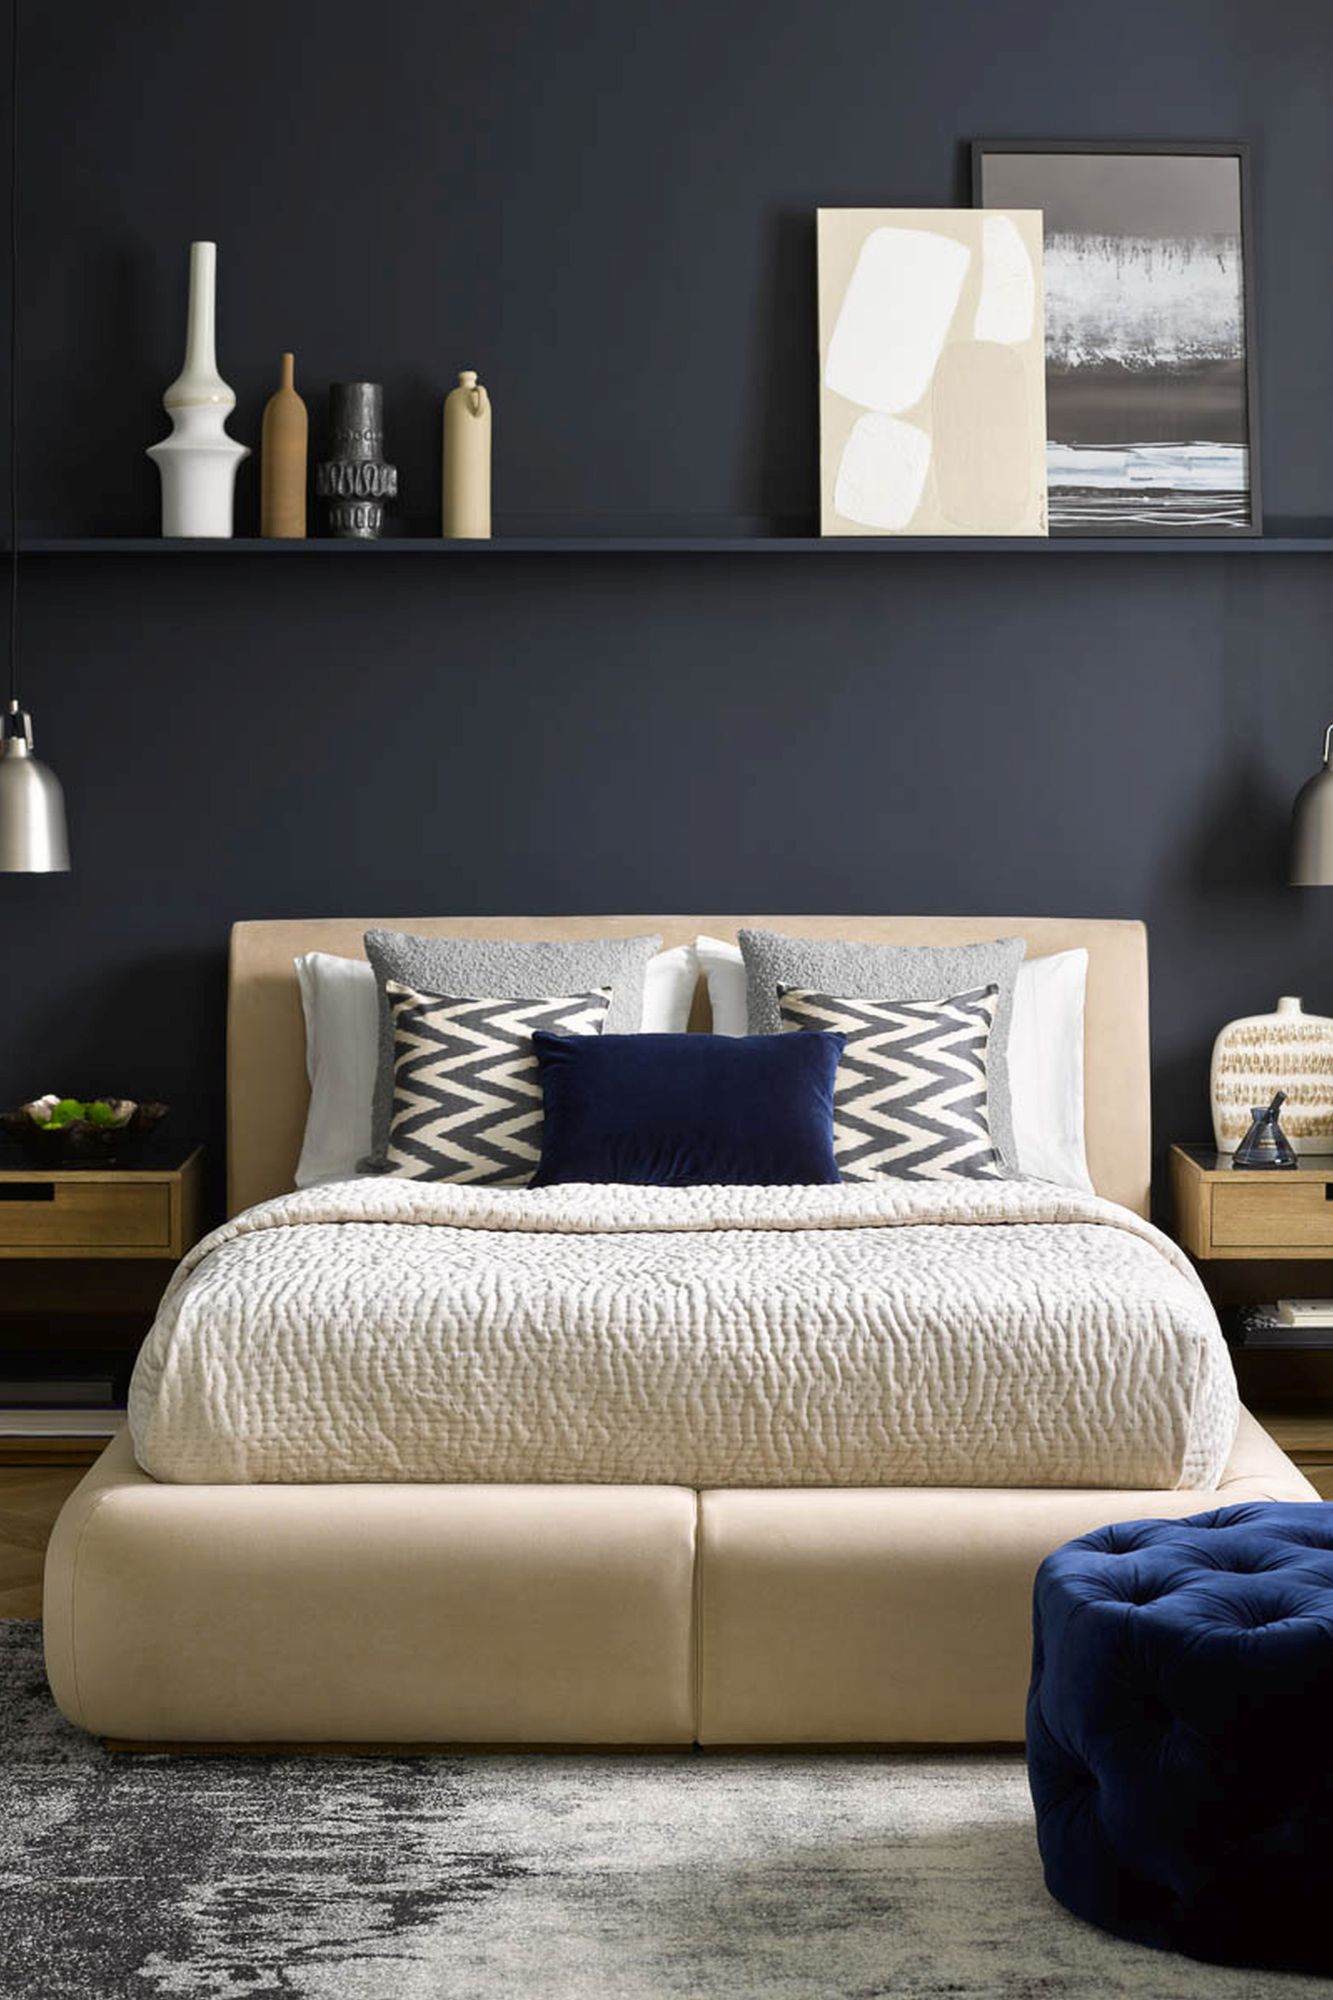 bedroom designs, Sofa.com Shares Current Bedroom Design Trends